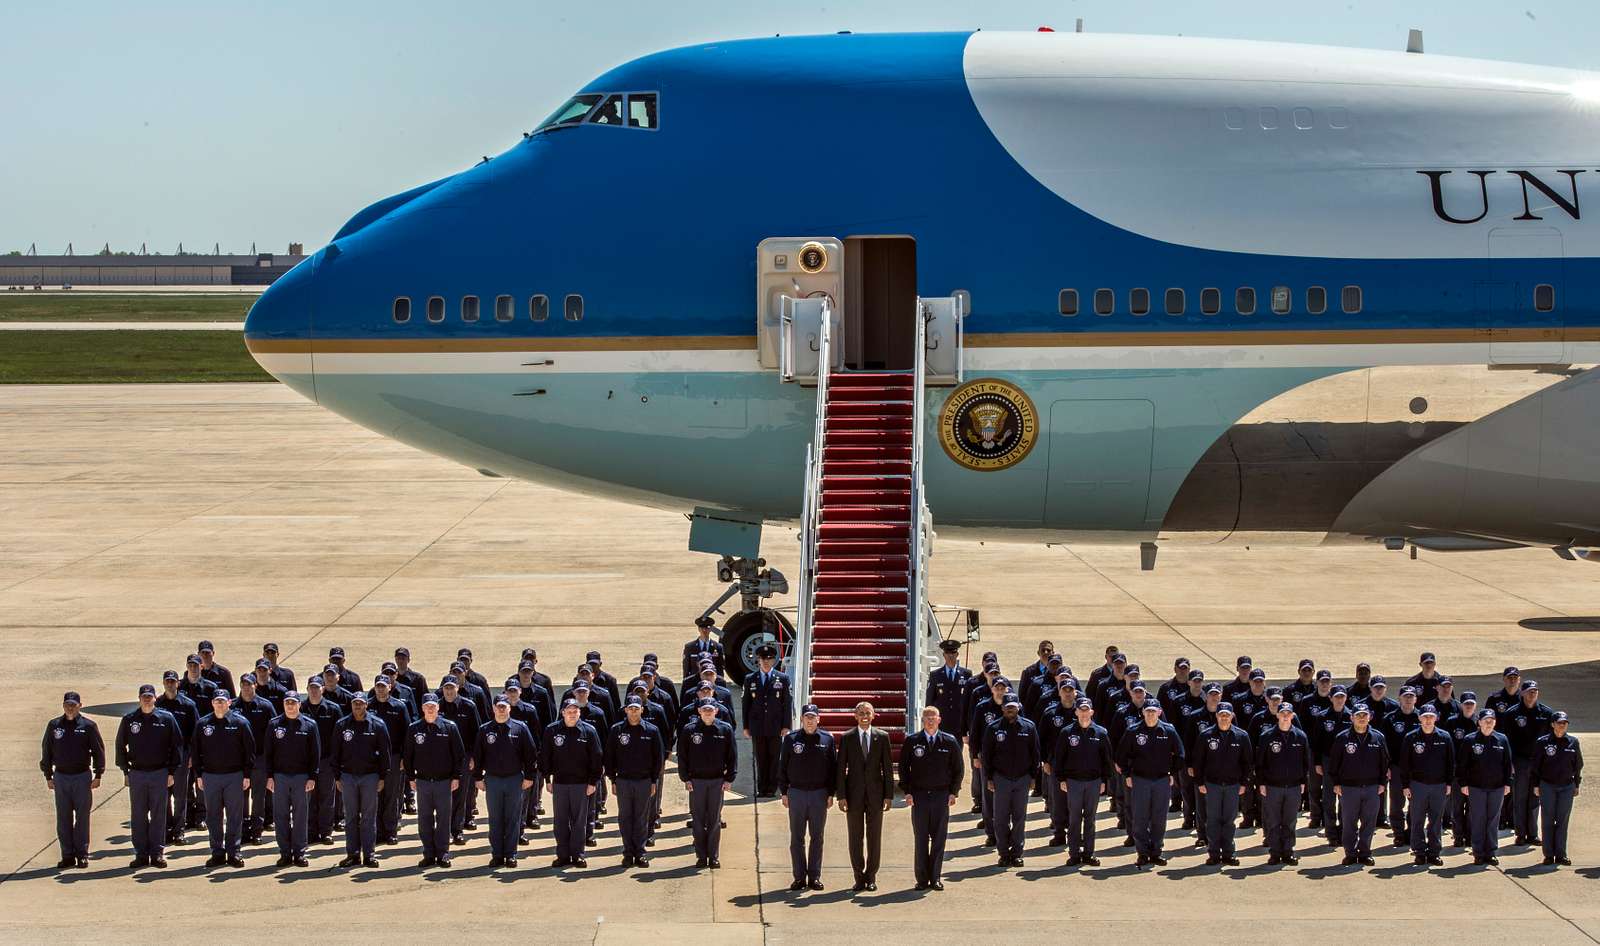 Борт номер 1. Президентский Боинг 747. Боинг 747 президента США. Самолет Боинг 747 президента США. Борт 1 США.